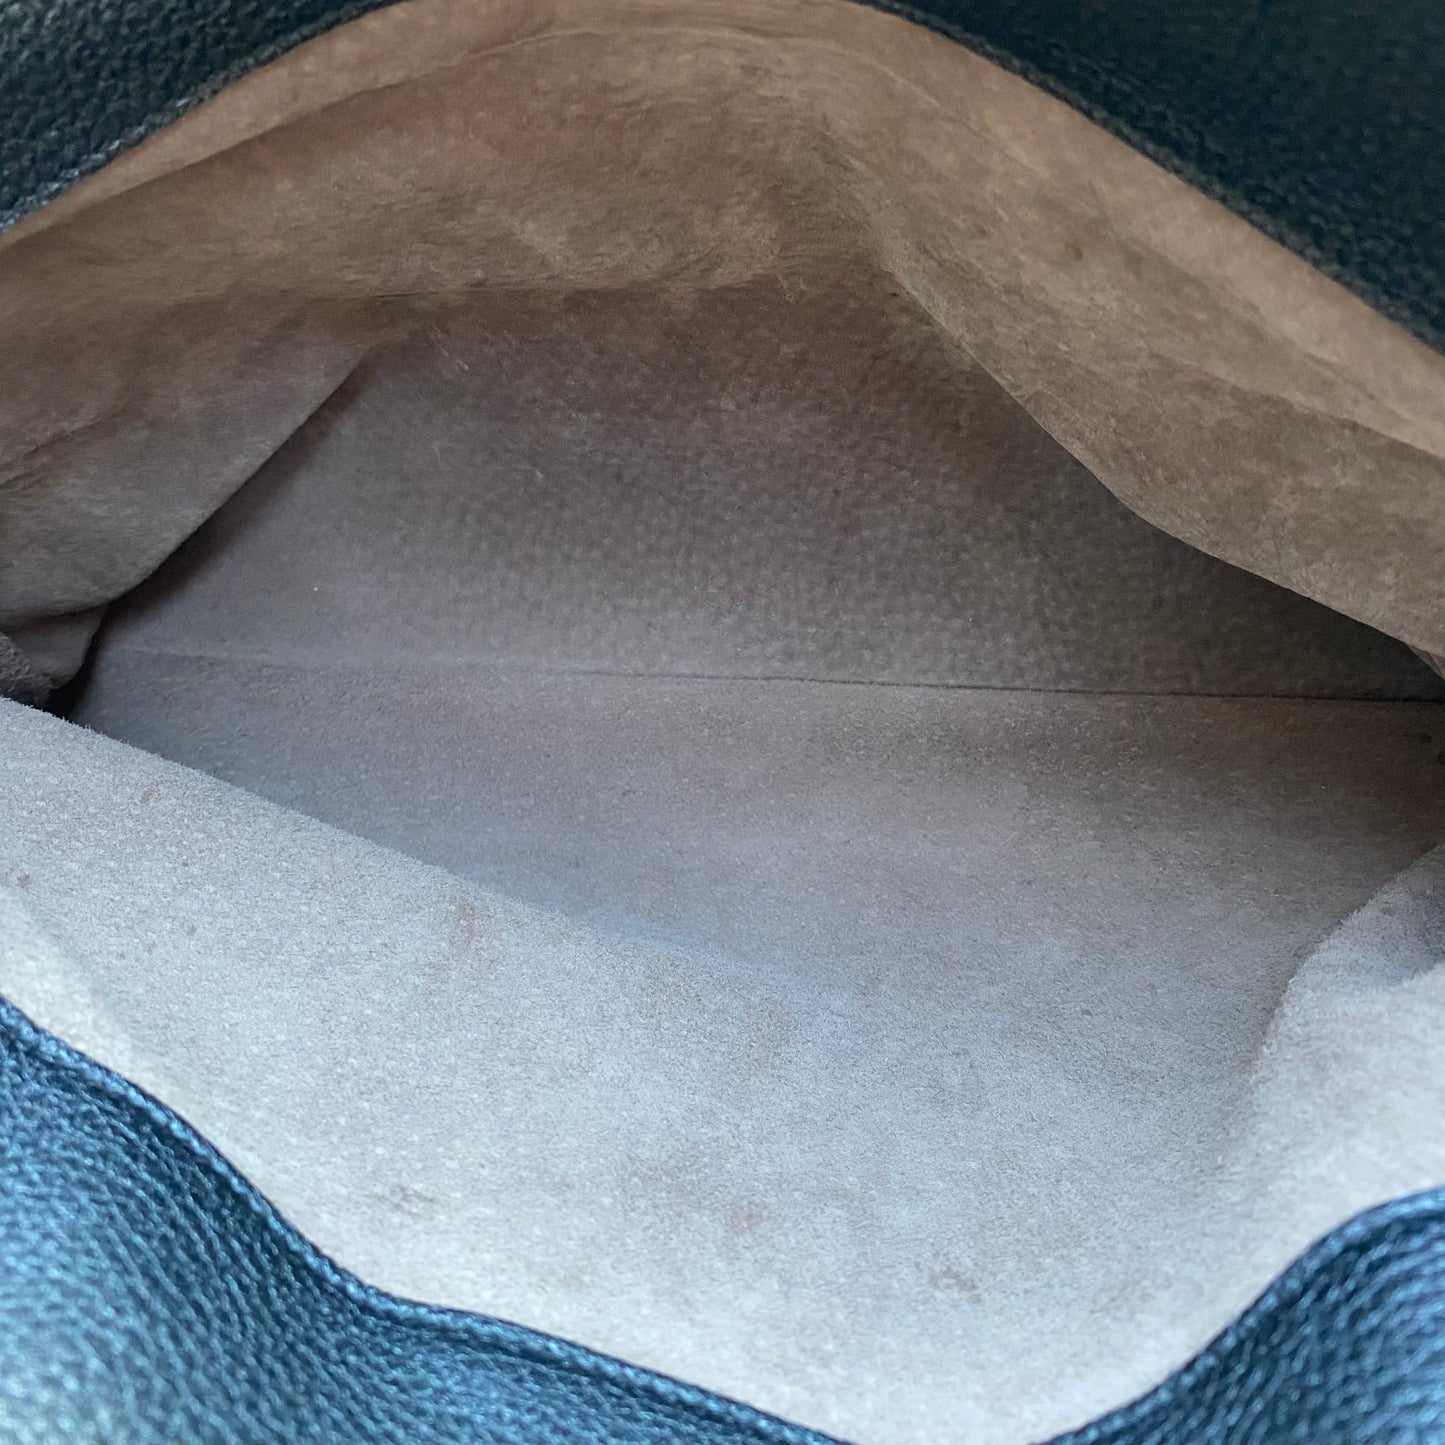 Bottega Veneta Roma Triple-Compartment Pebbled Leather Intrecciato Tote Bag